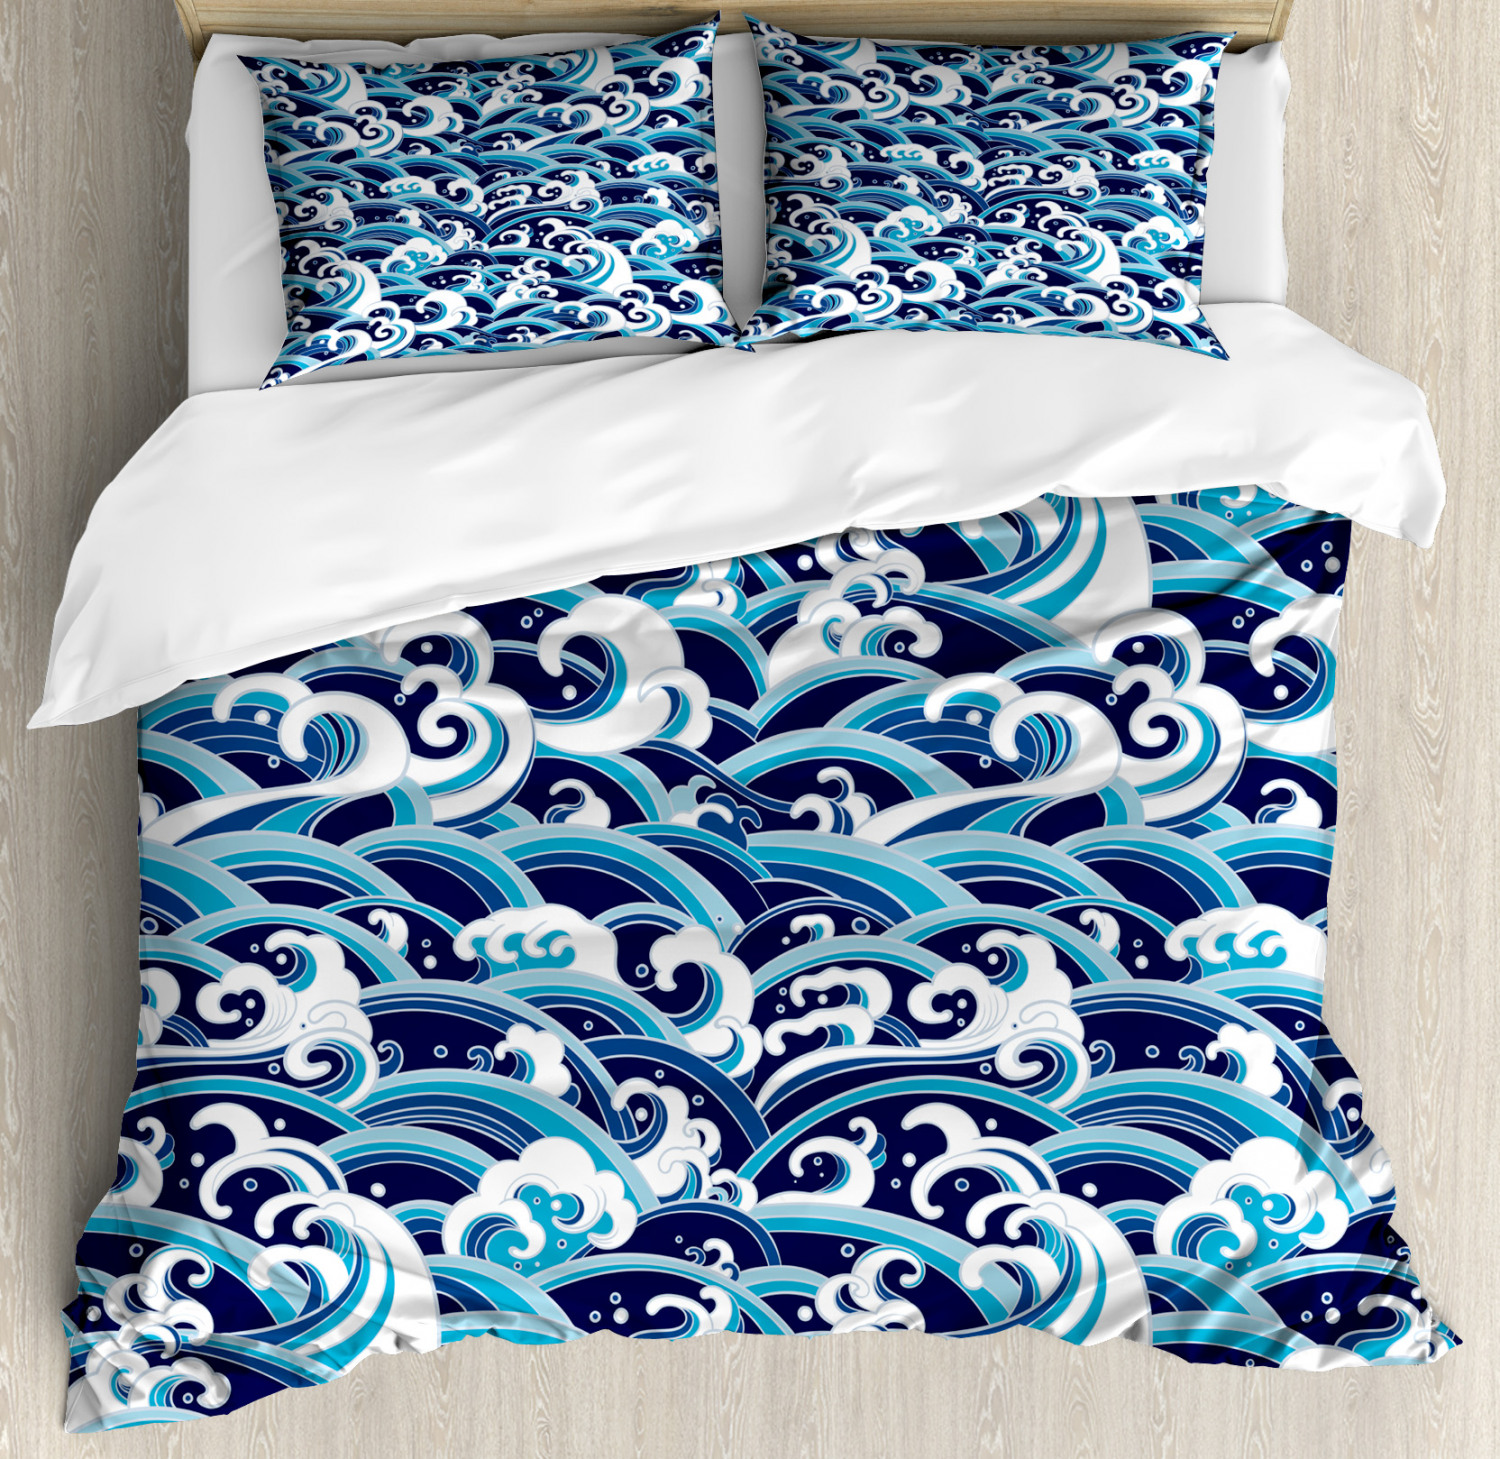 Japanese Wave Duvet Cover Set with Pillow Shams Splash Print | eBay